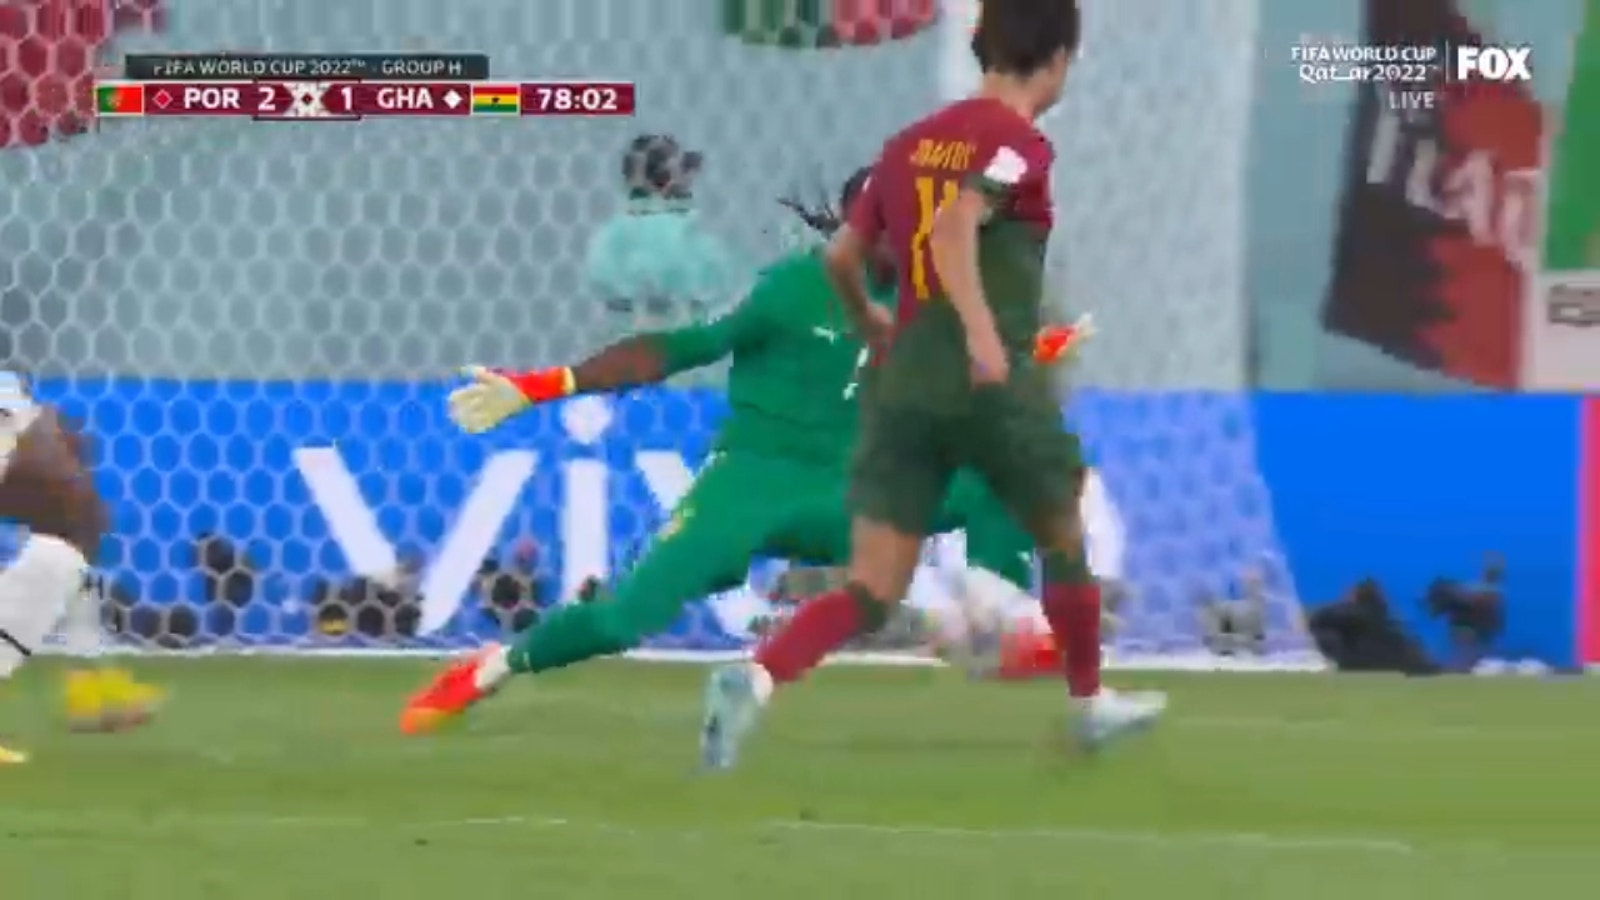 Portugal's Joao Felix scores goal vs. Ghana